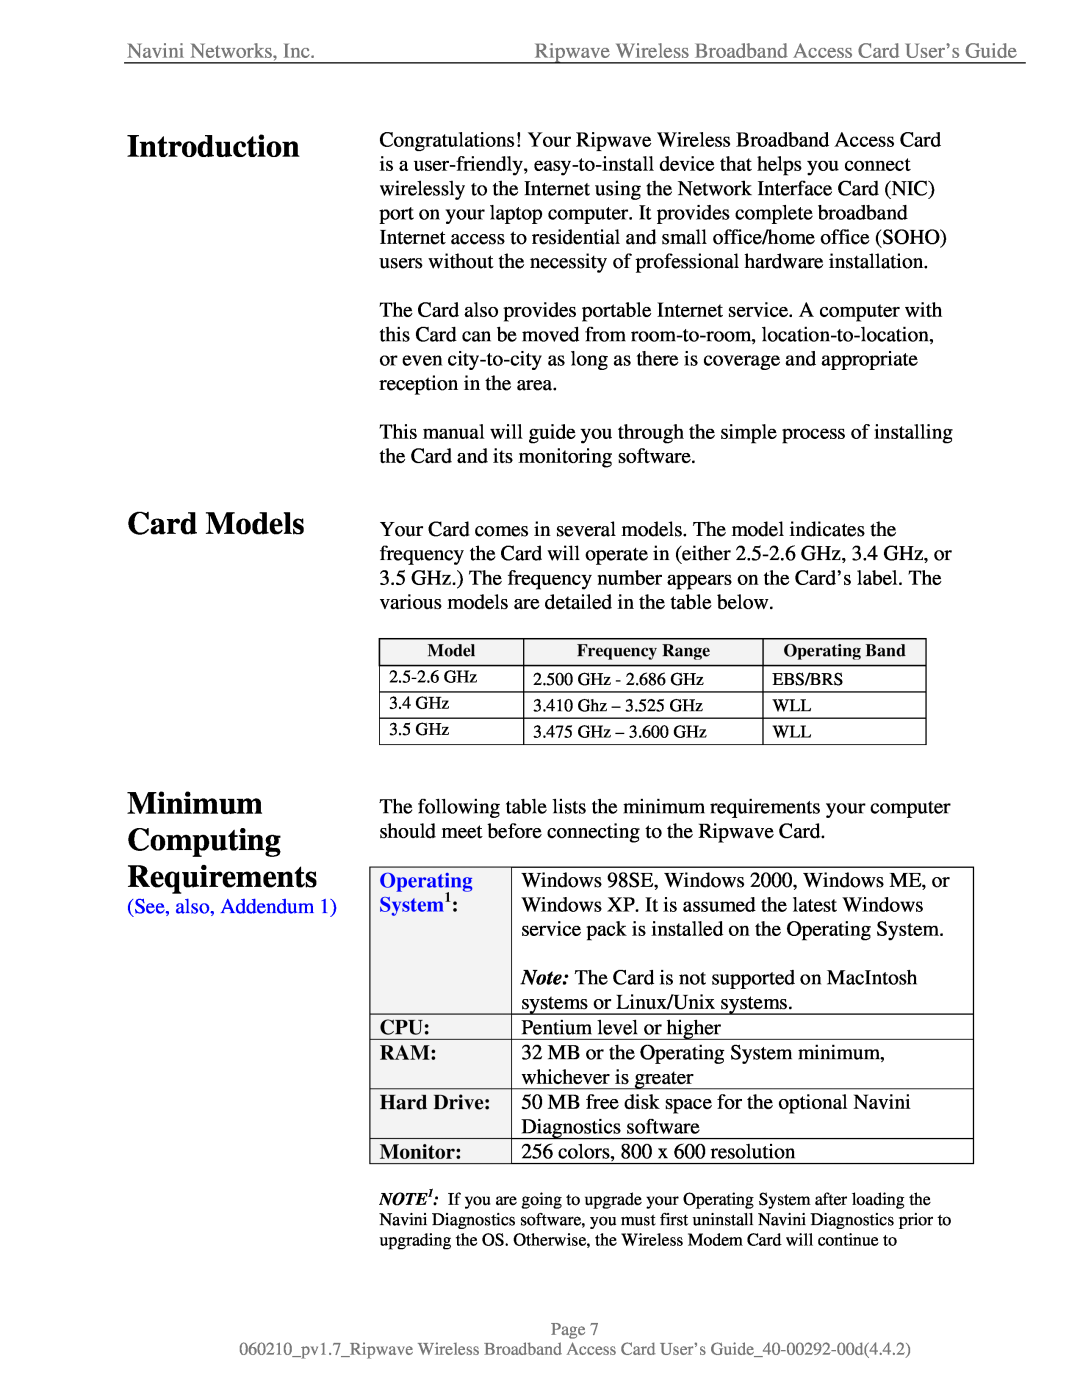 Navini Networks 40-00292-00 manual Introduction Card Models, Minimum Computing Requirements, Hard Drive, Monitor, Operating 